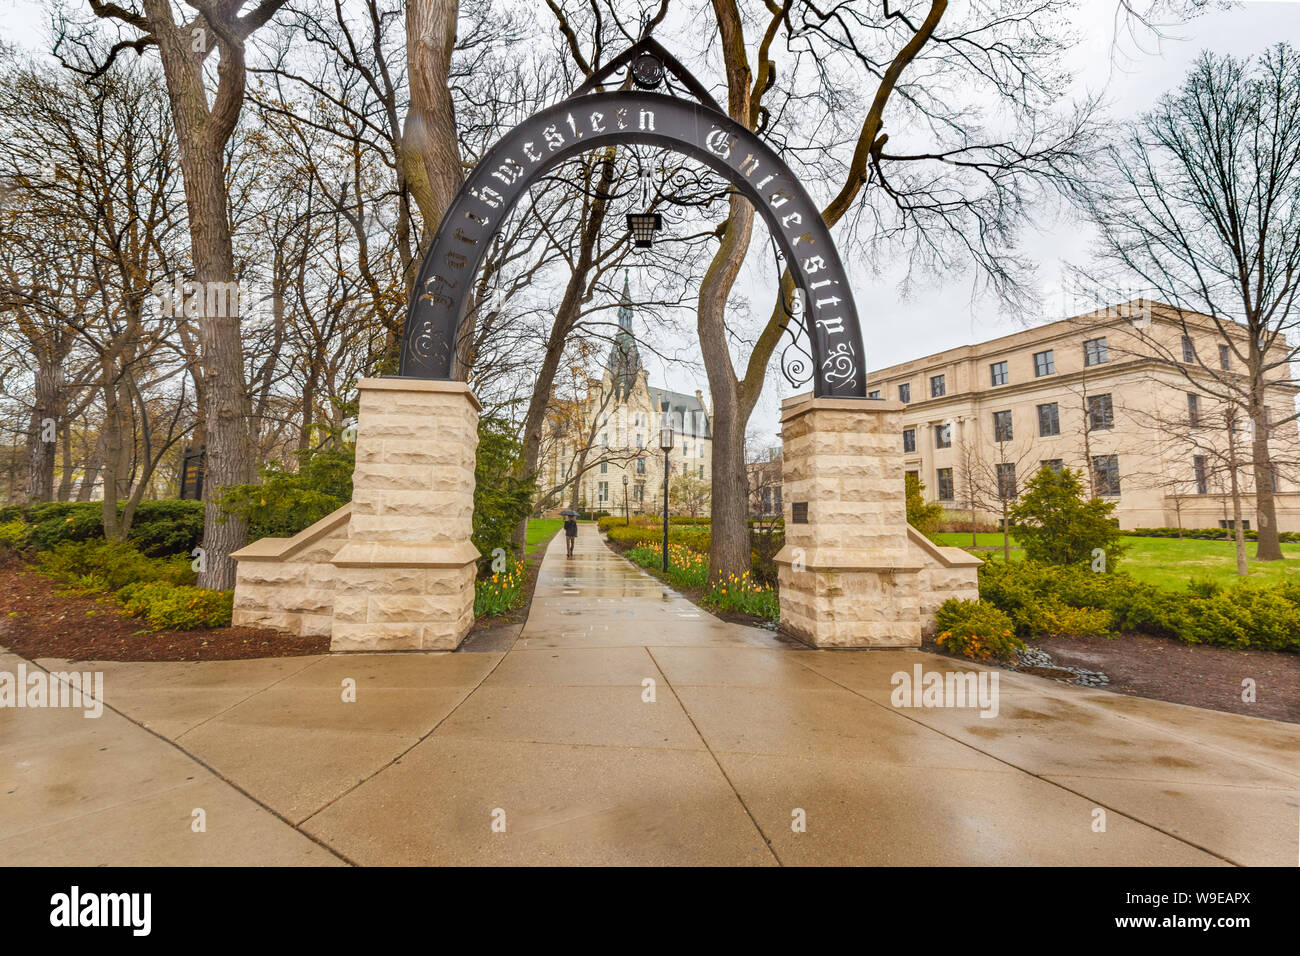 EVANSTON, IL, USA - 30. April: Weber Arch am 30. April 2016 an der Northwestern University in Evanston, Illinois. Stockfoto